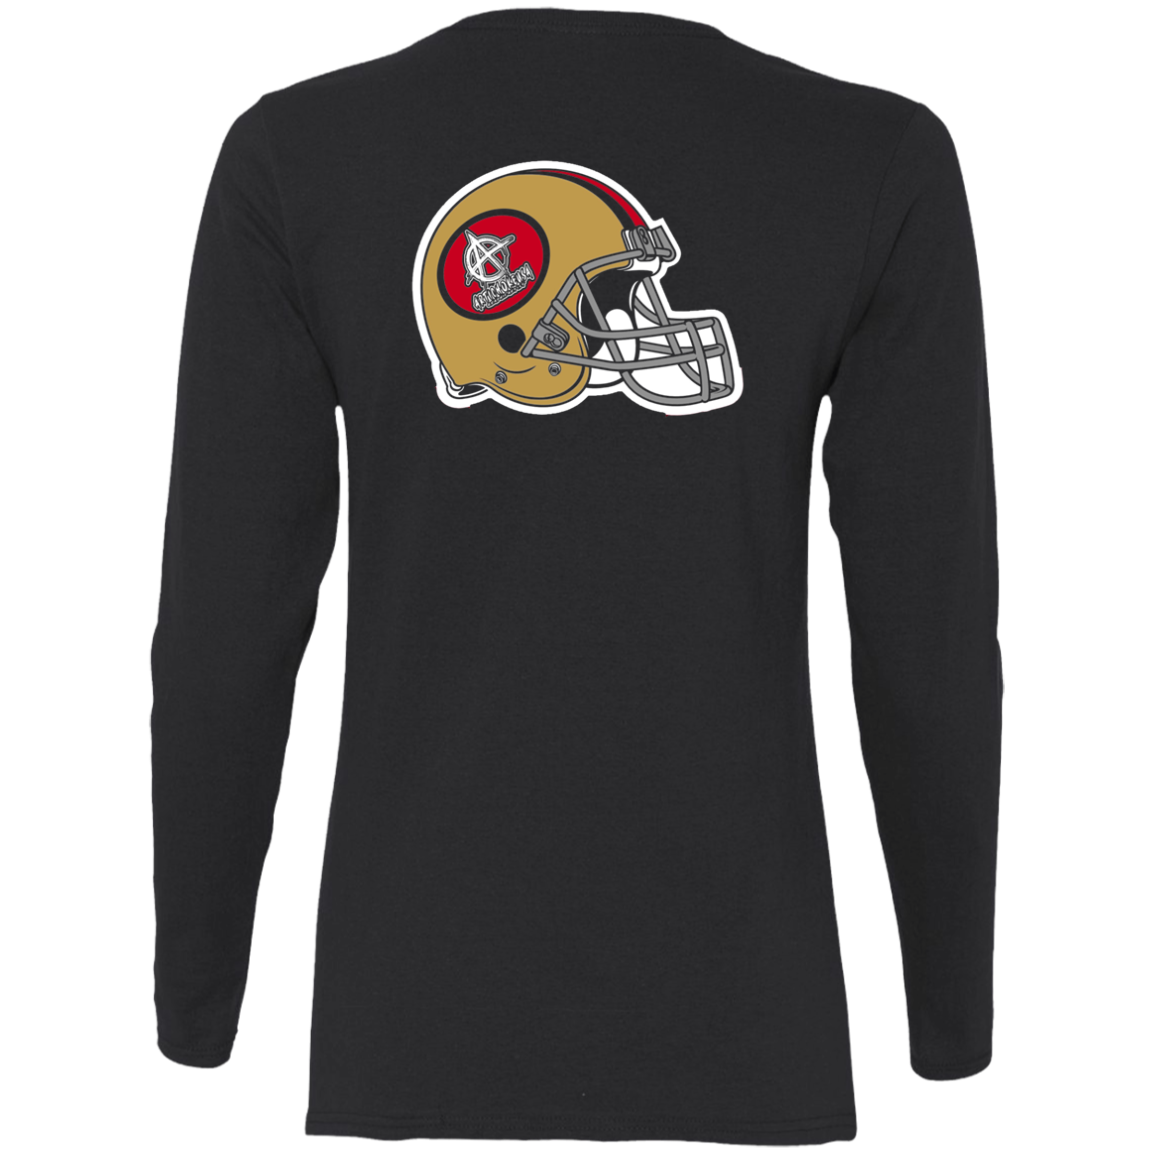 ArtichokeUSA Custom Design #50. 9ers Love. SF 49ers Fan Art. Let's Make Your Own Custom Team Shirt. Ladies' 100% Cotton Long Sleeve T-Shirt